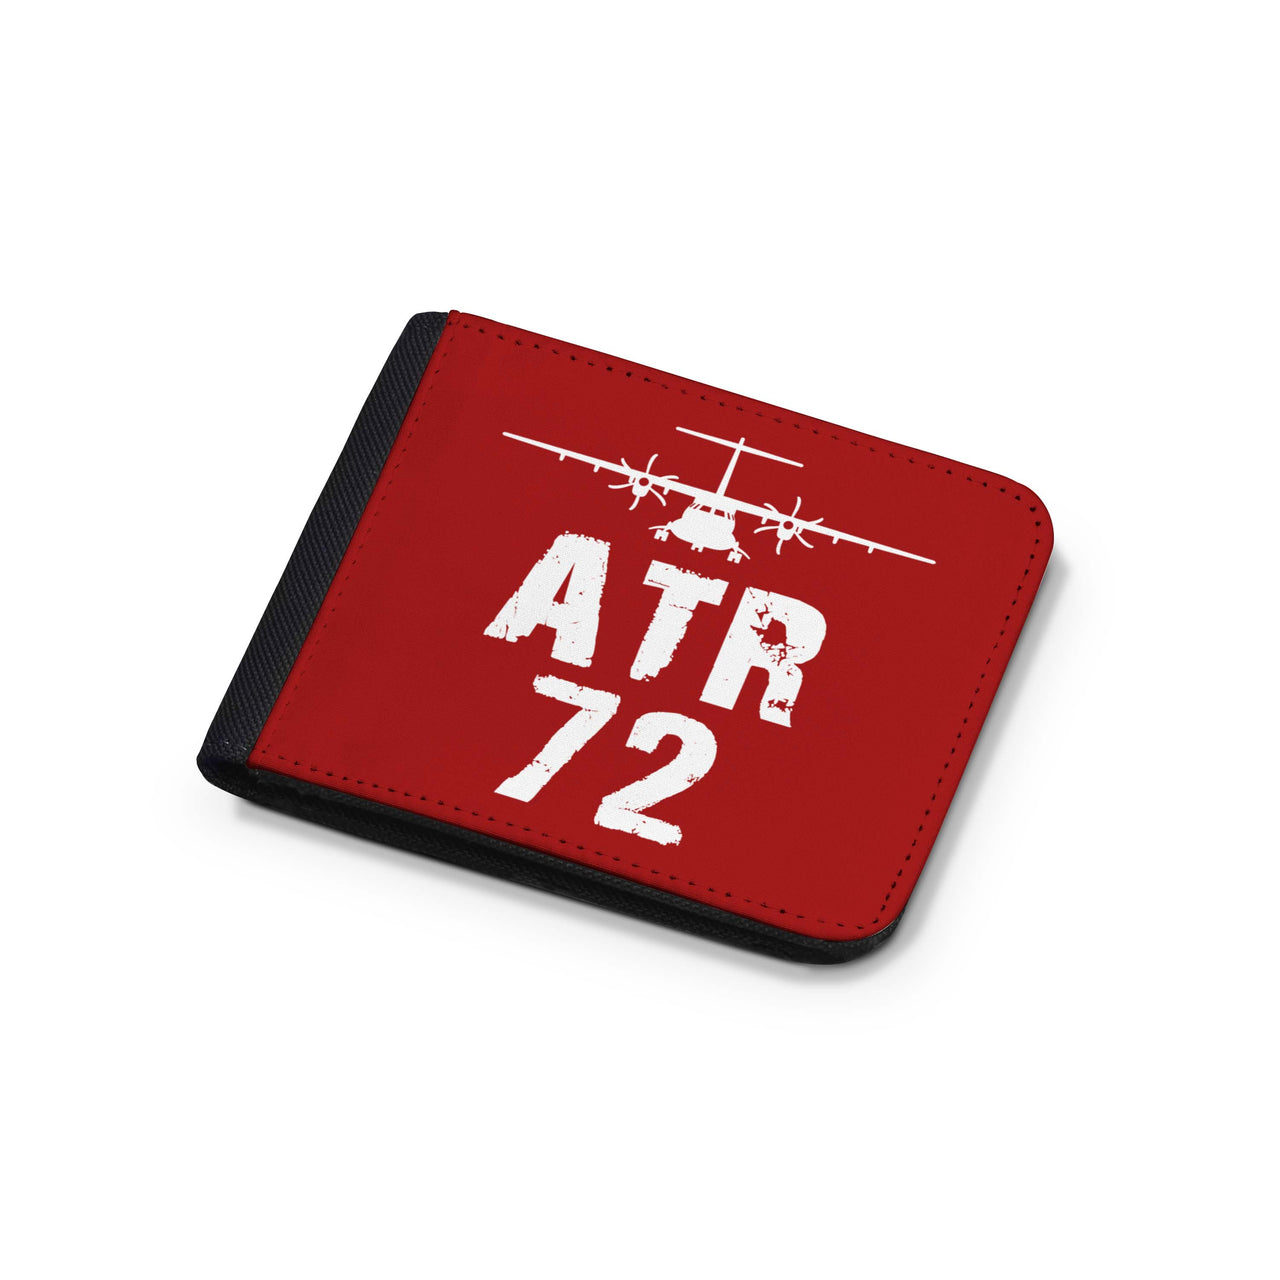 ATR-72 & Plane Designed Wallets